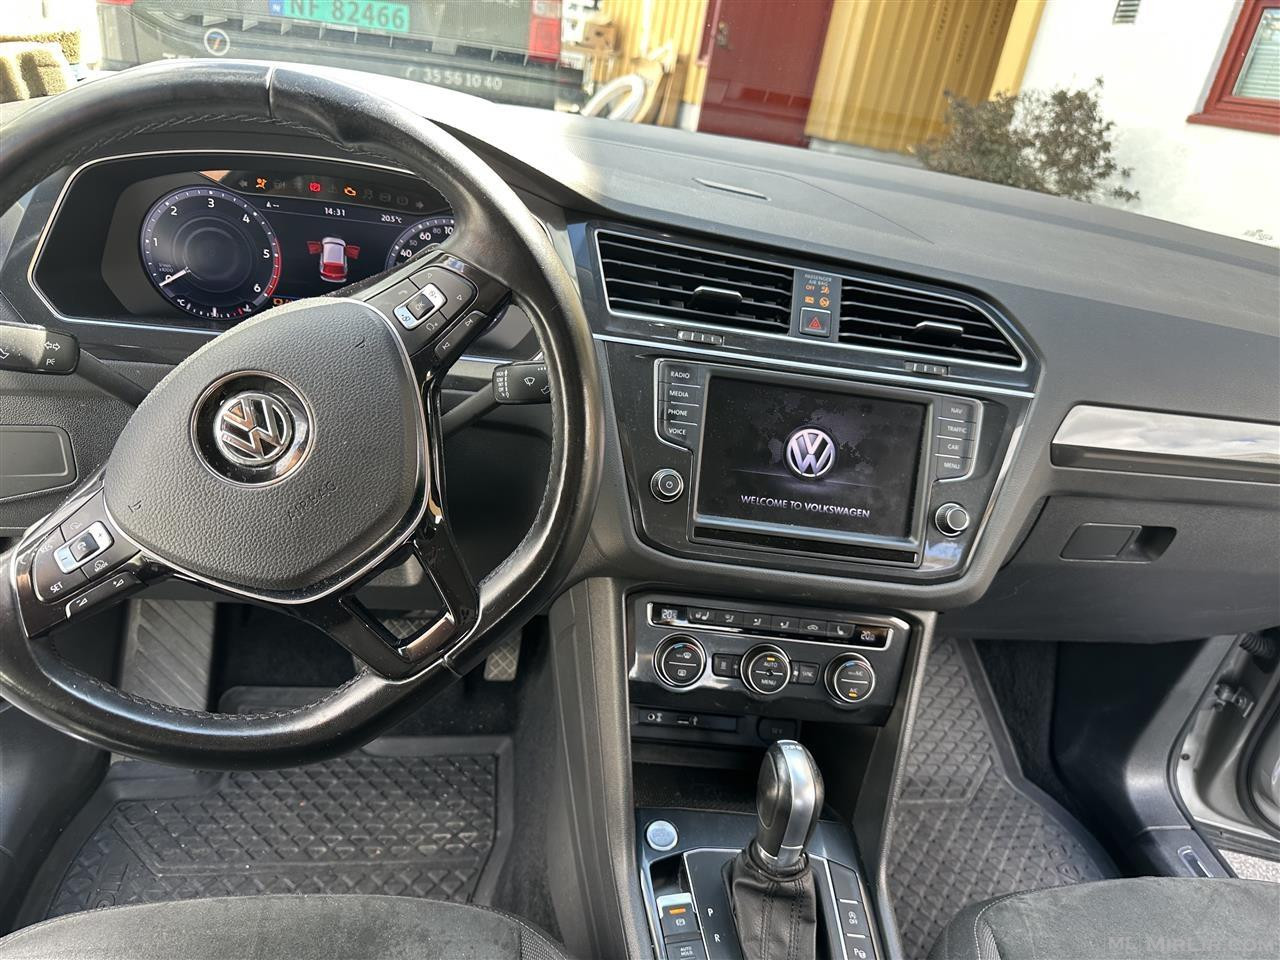 VW TIGUAN HIGHLINE 2.0 TDI 2017 190ps DSG